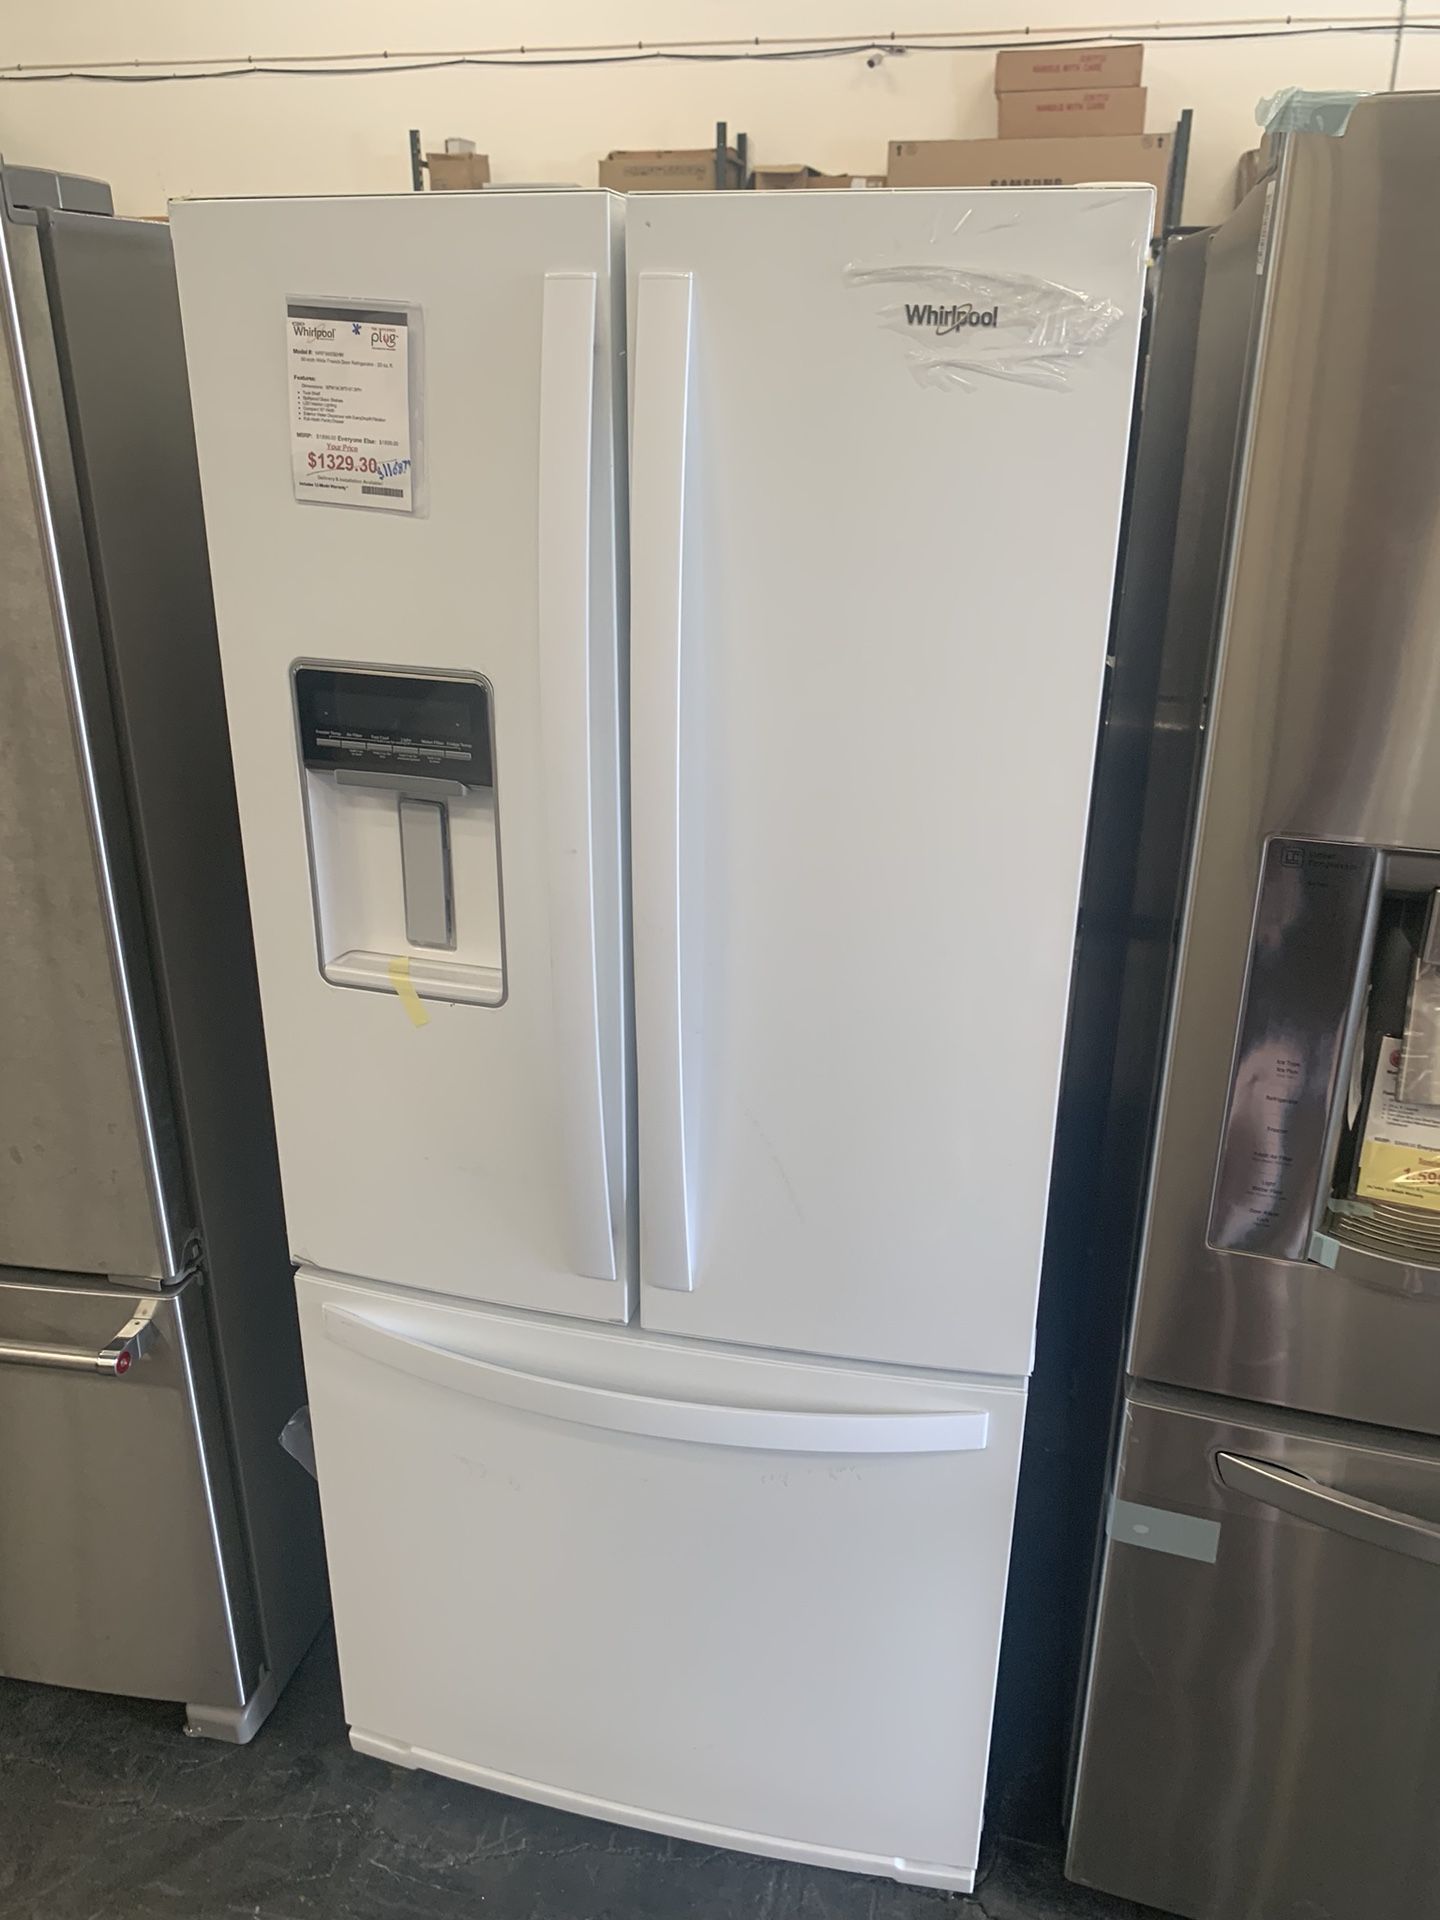 New whirlpool 30” French door refrigerator